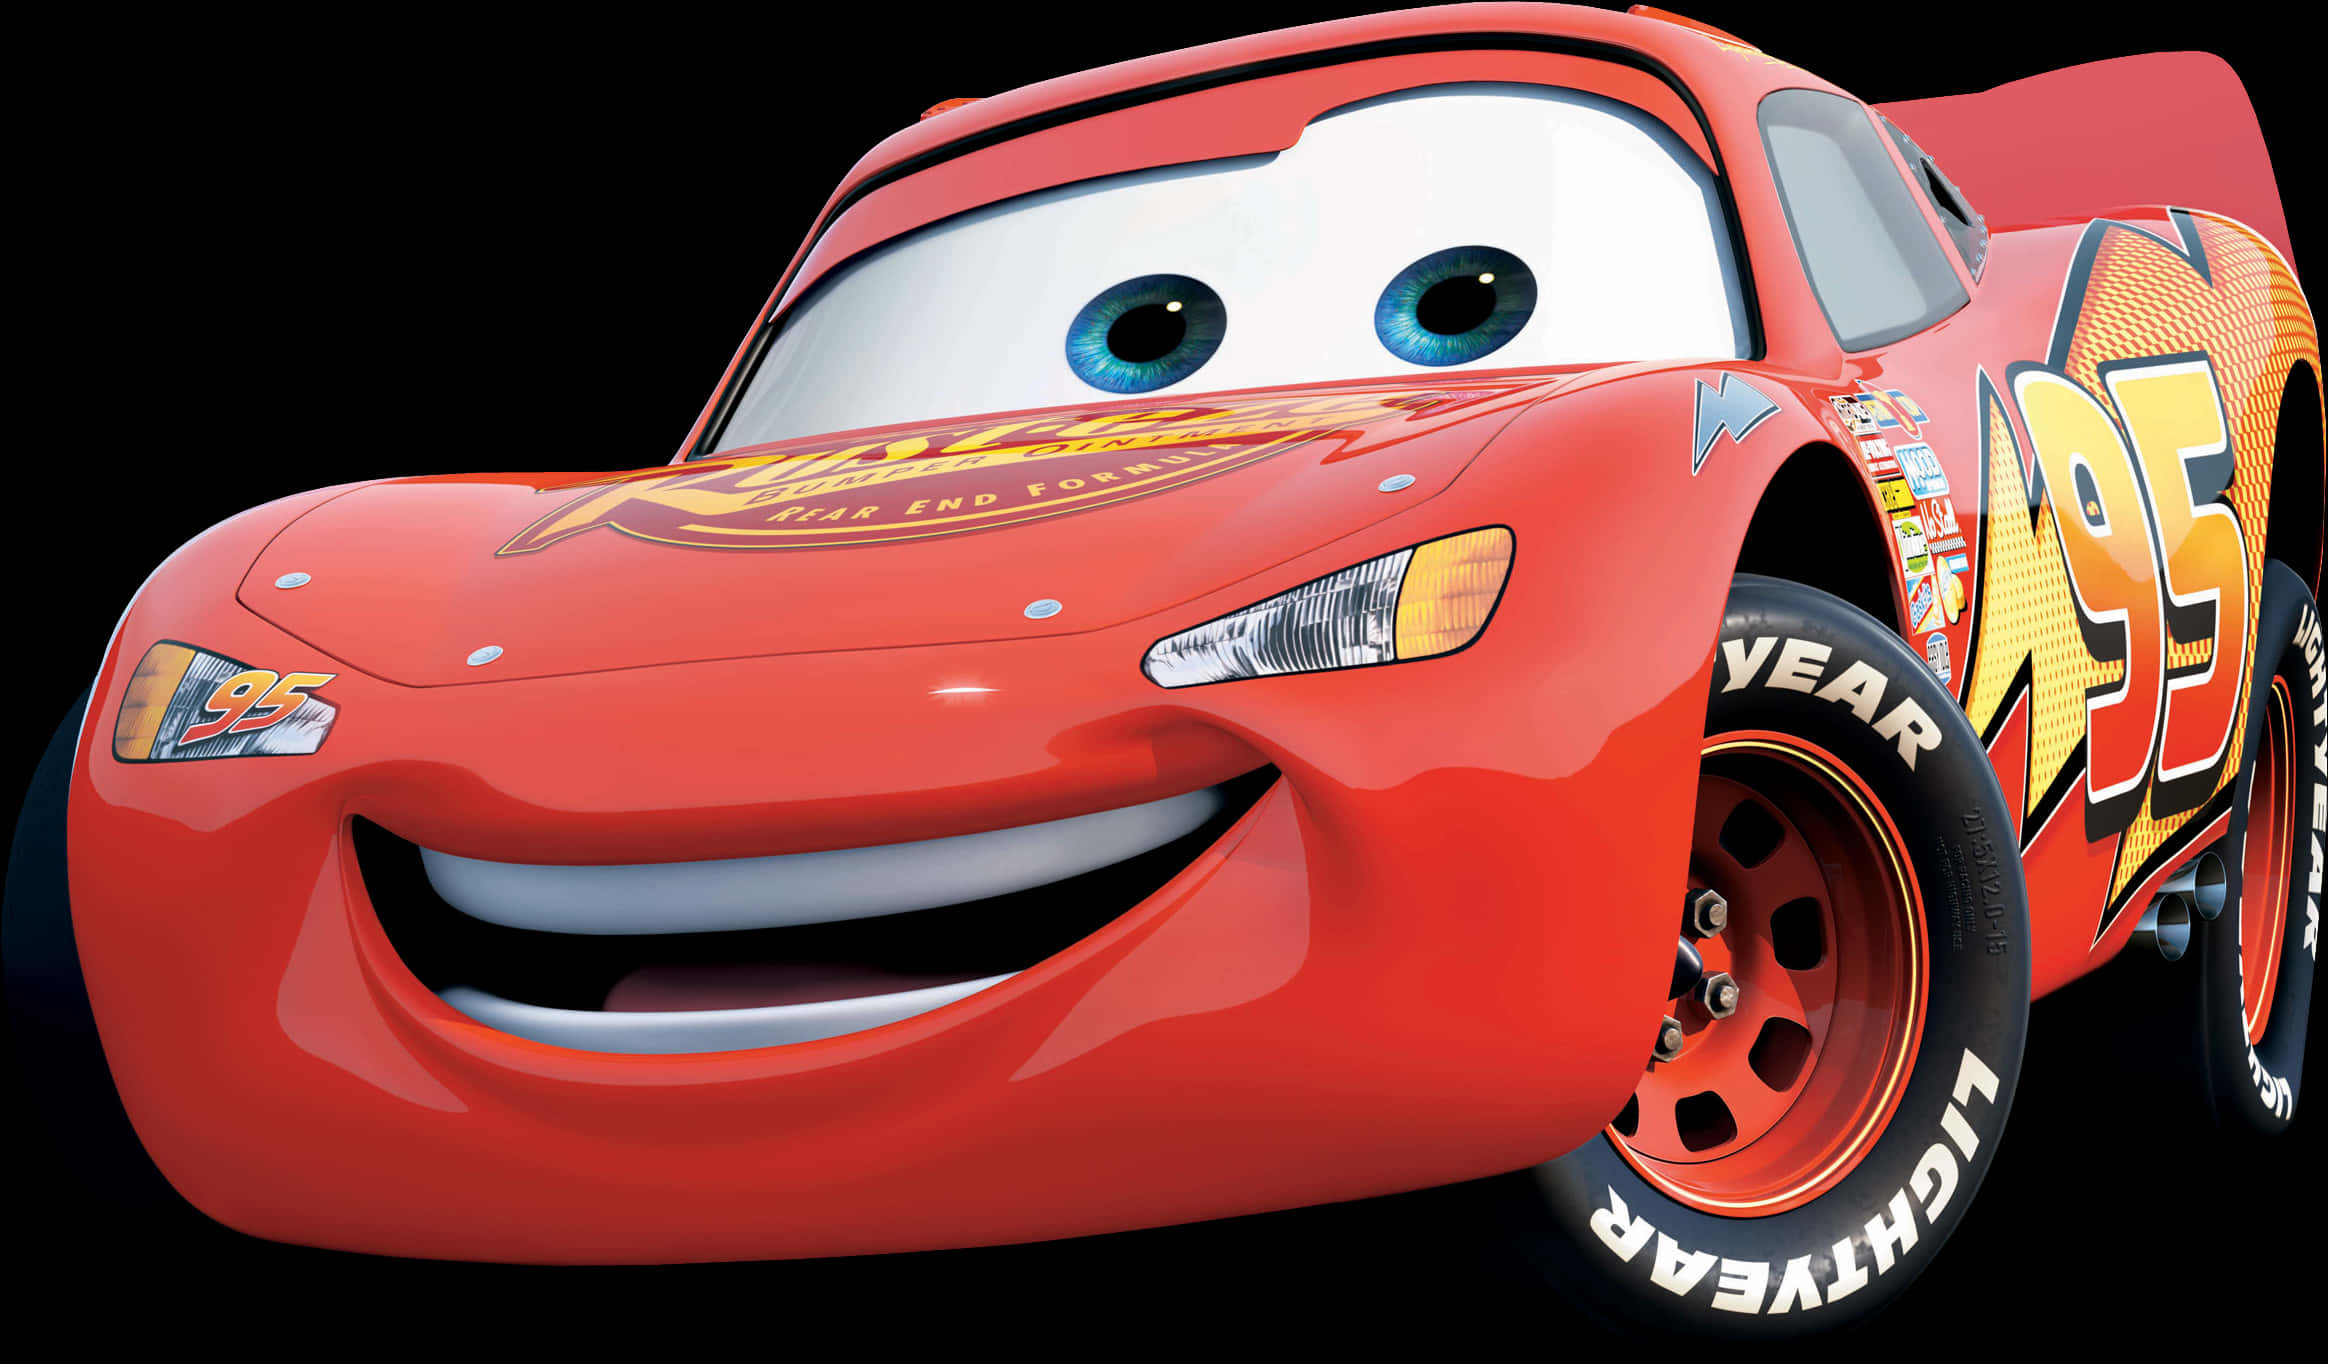 A Cartoon Car With A Smiling Face